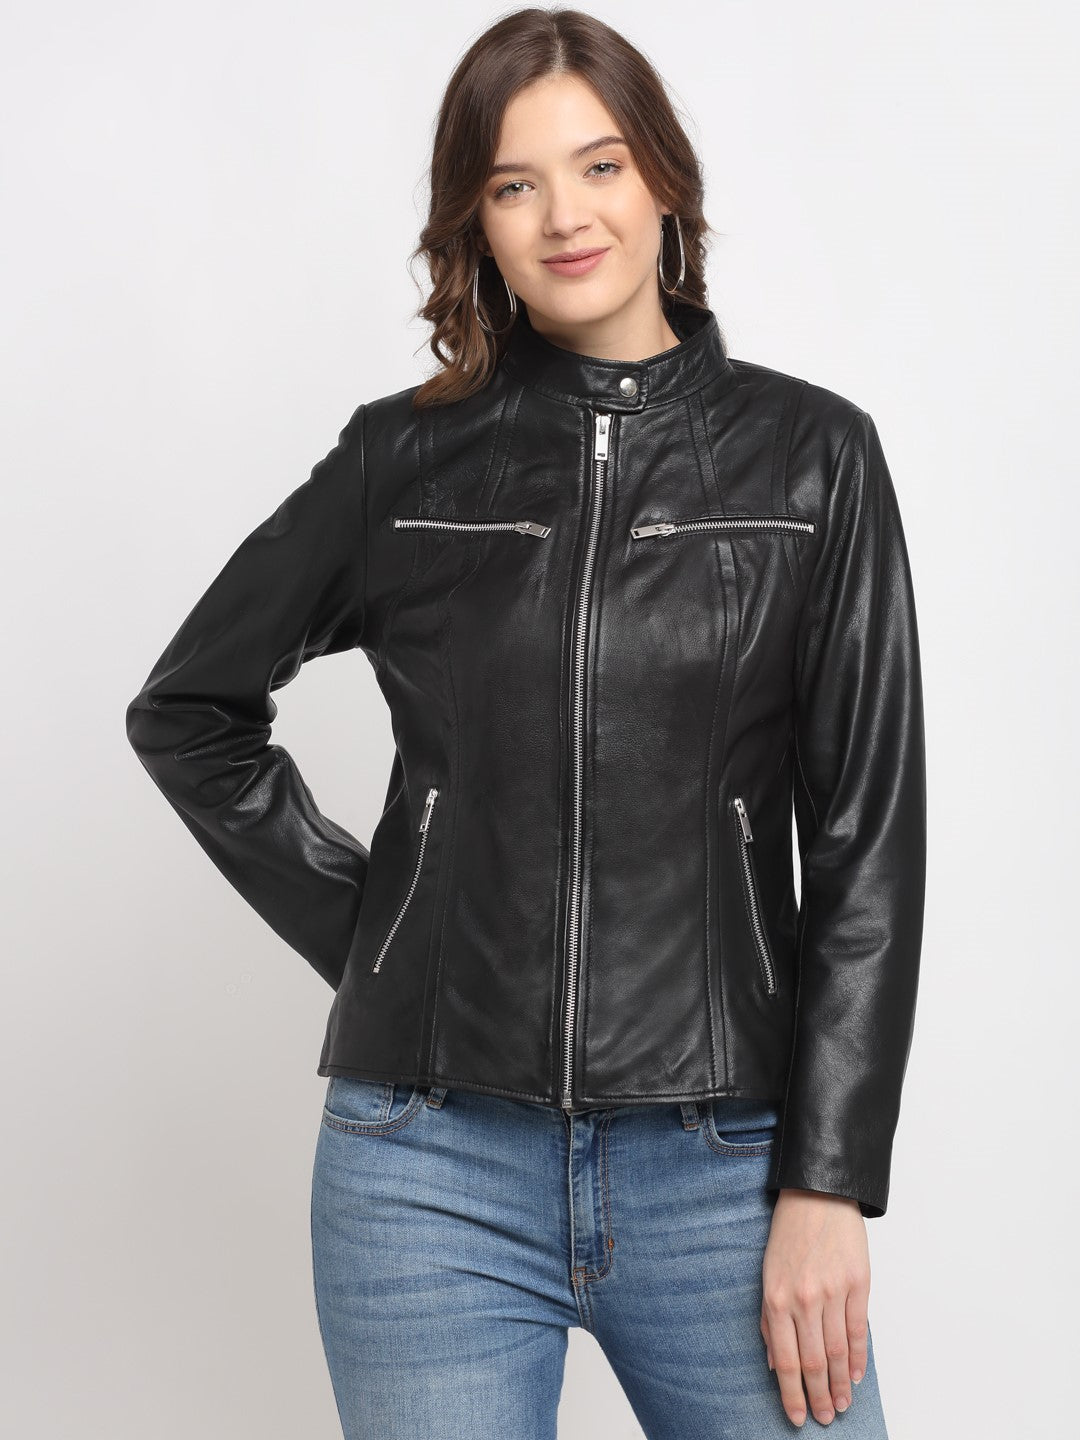 Women's Leather Jacket, Women's Black Leather Jacket Made of 100